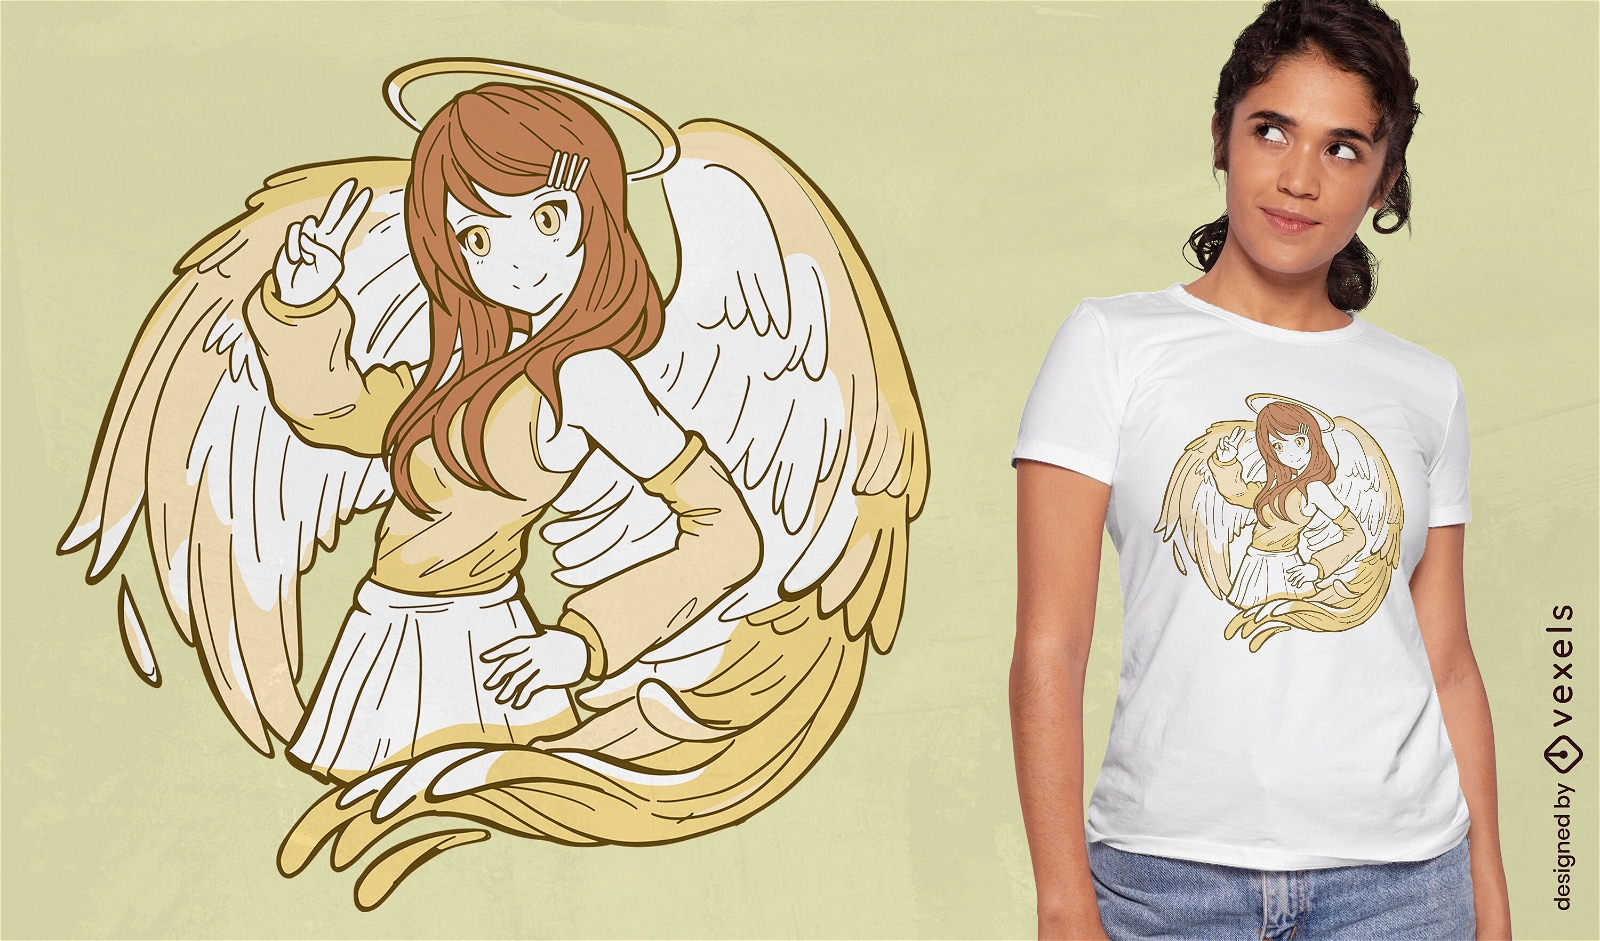 Diseño de camiseta de personaje de ángel de anime.